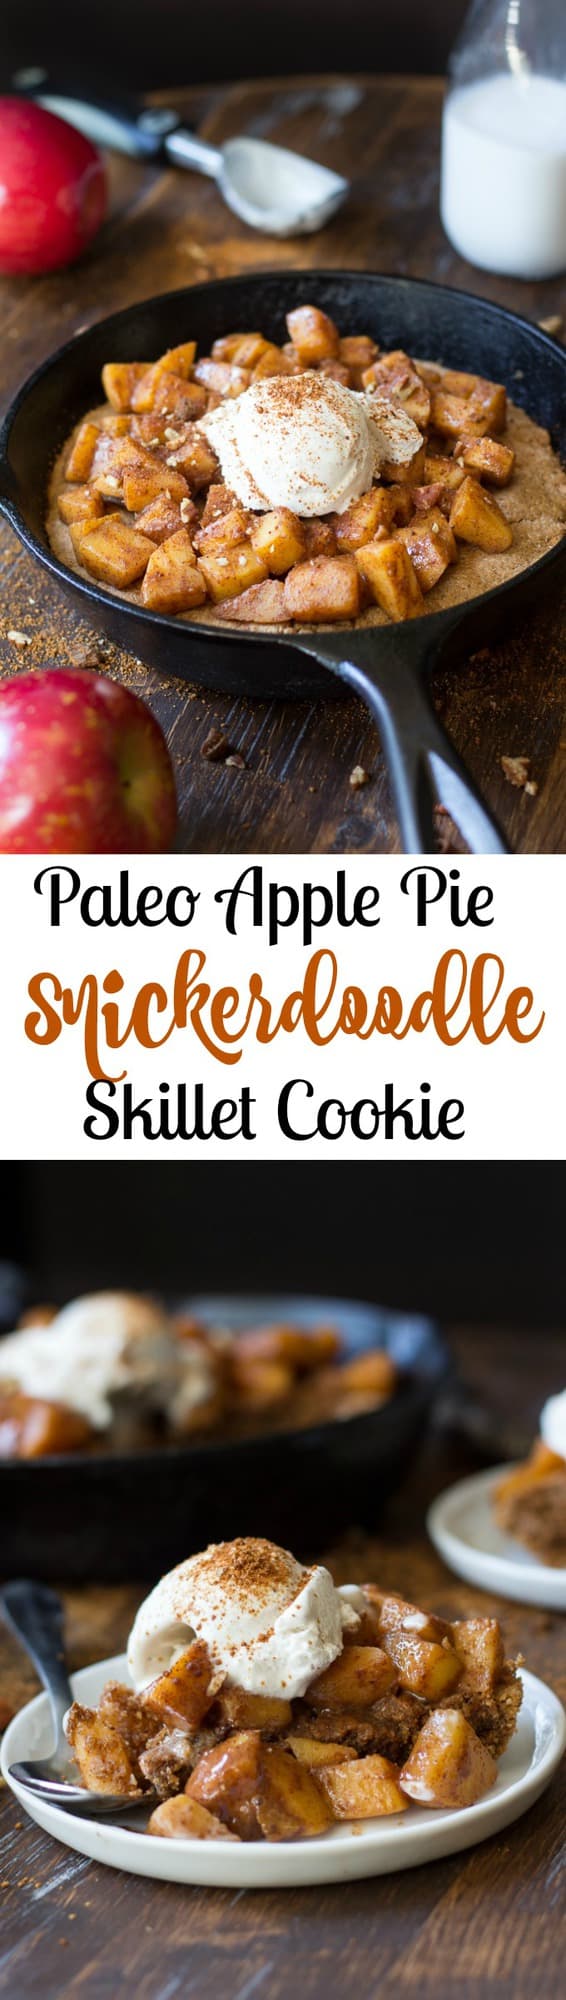 paleo apple pie snickerdoodle skillet cookie - chewy paleo snickerdoodle skillet cookie topped with healthy, refined sugar free apple pie filling! Amazing Paleo dessert!